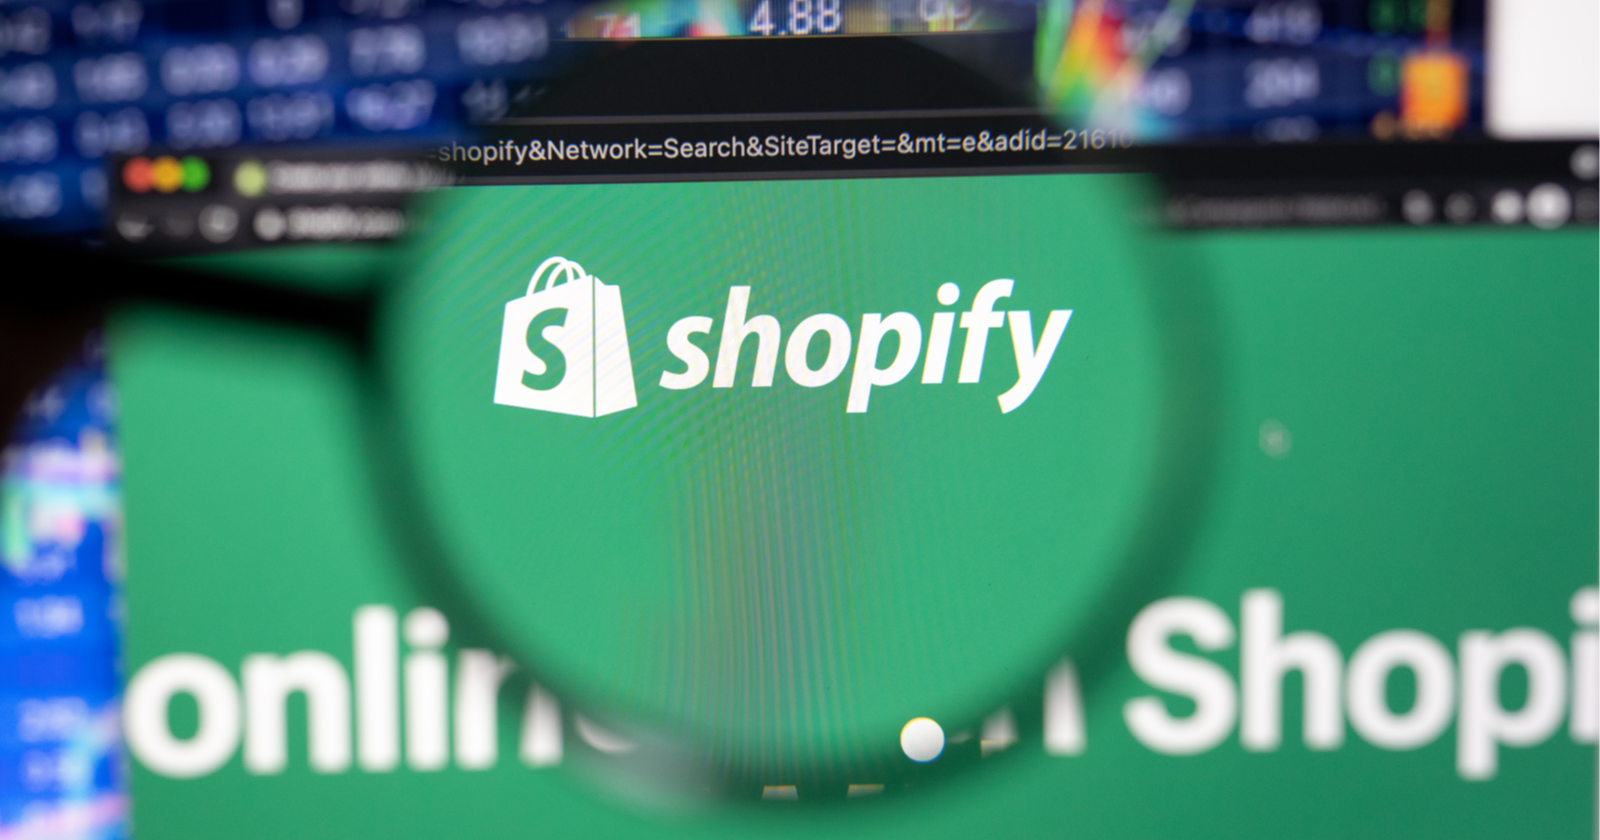 Shopify markets